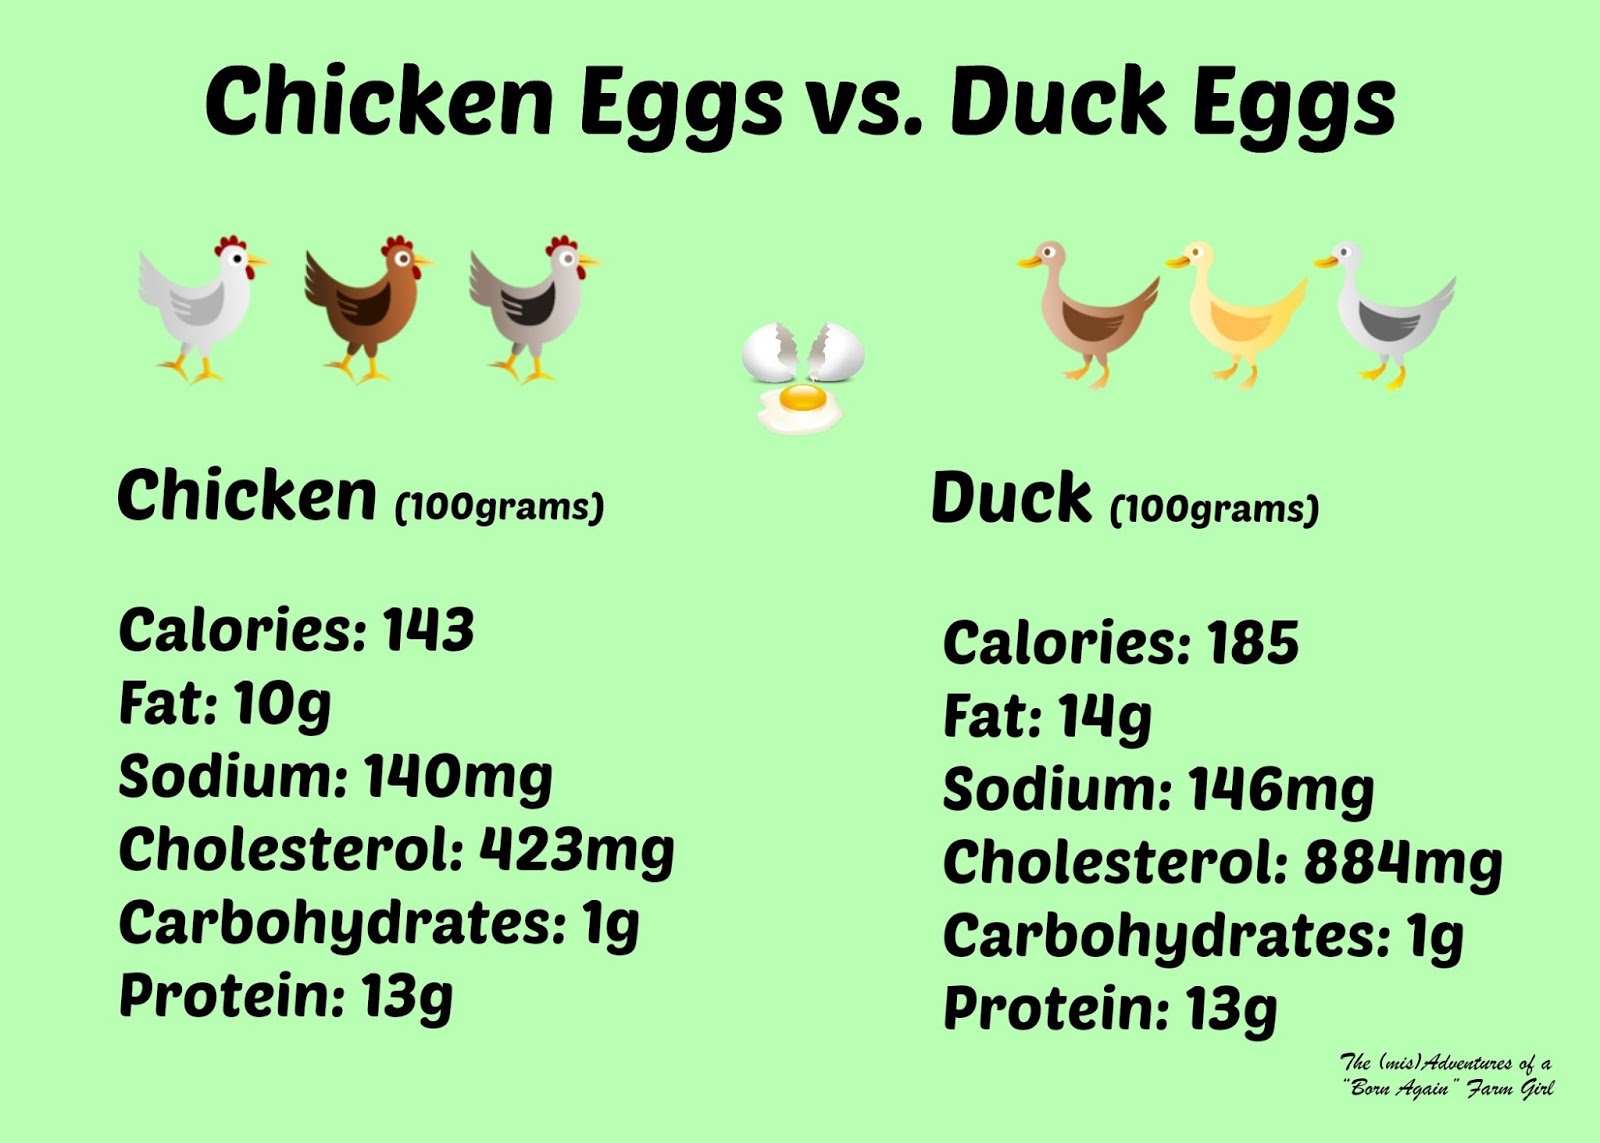 Chicken Eggs vs. Duck Eggs.